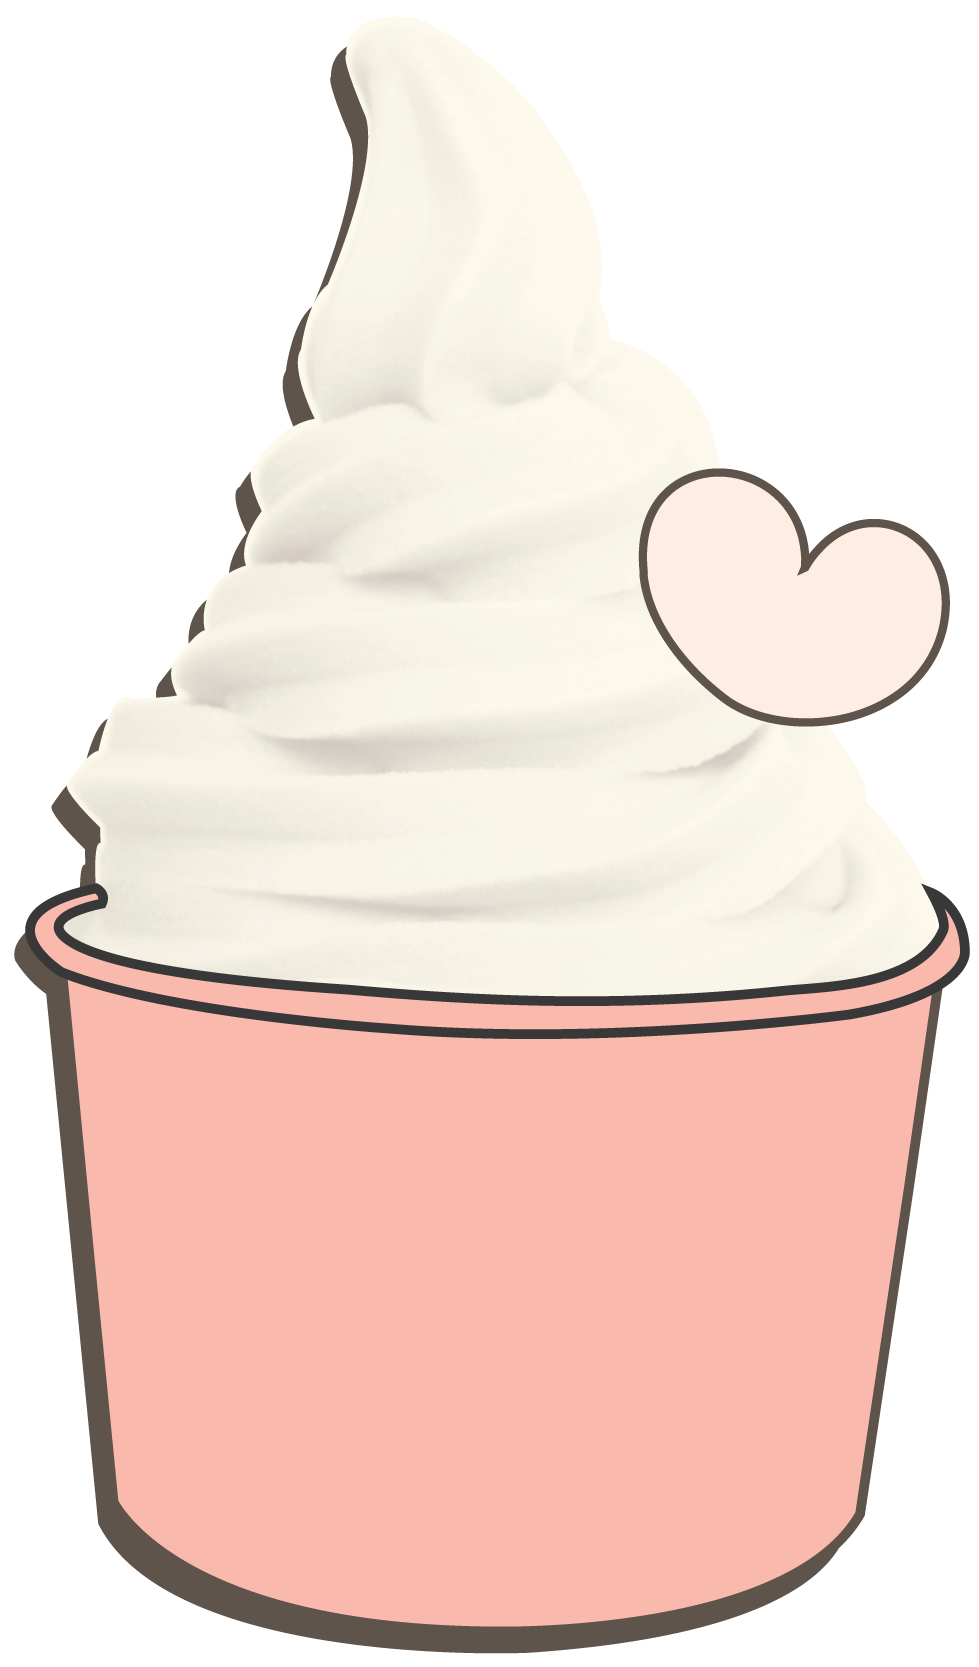 Sweetberry frozen yogurt gelato. Waffle clipart crepe cake